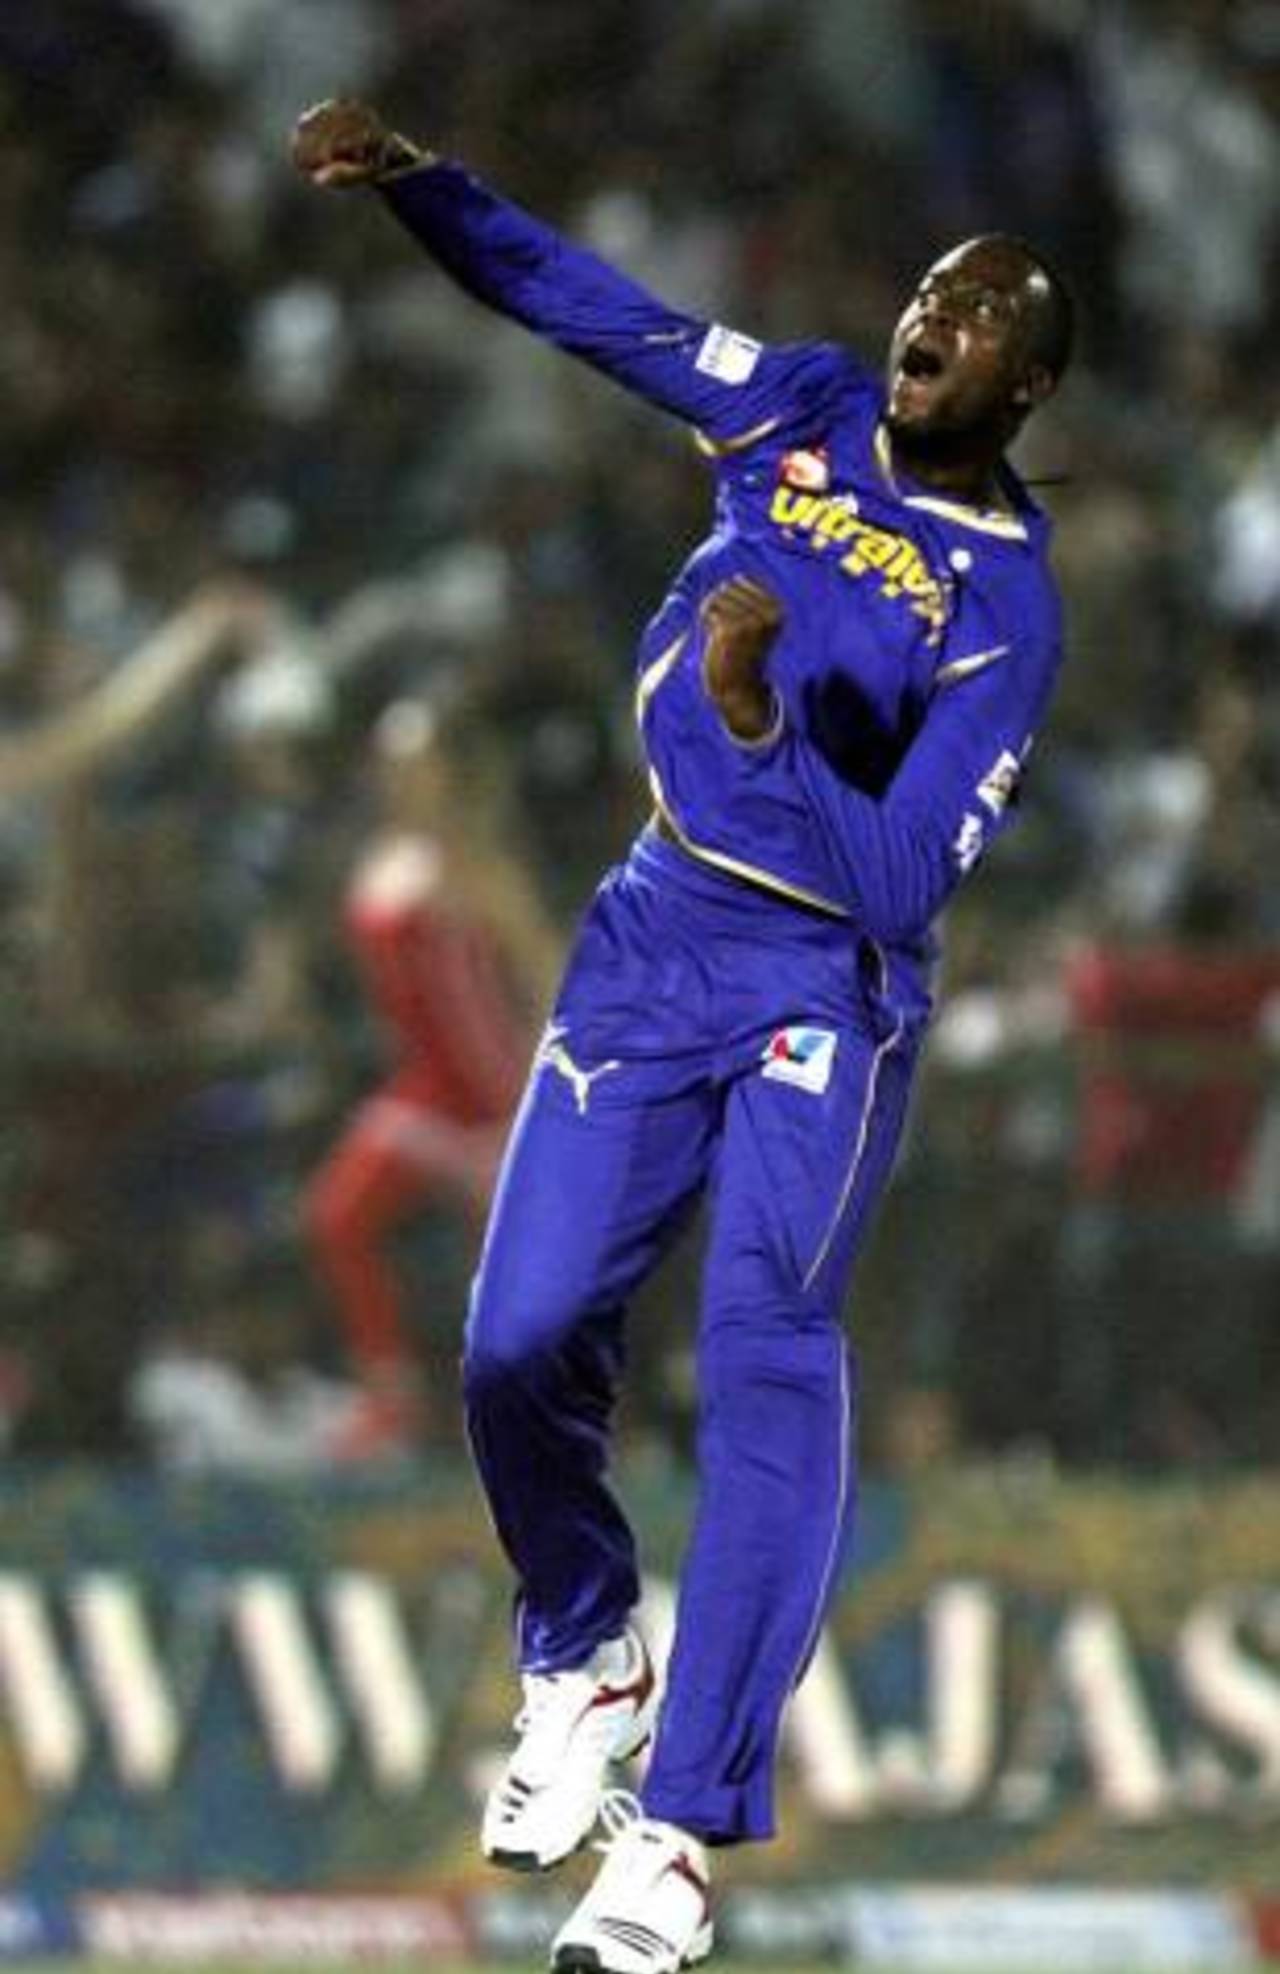 Kevon Cooper picked up four wickets, Rajasthan Royals v Kings XI Punjab, IPL, Jaipur, April 6, 2012